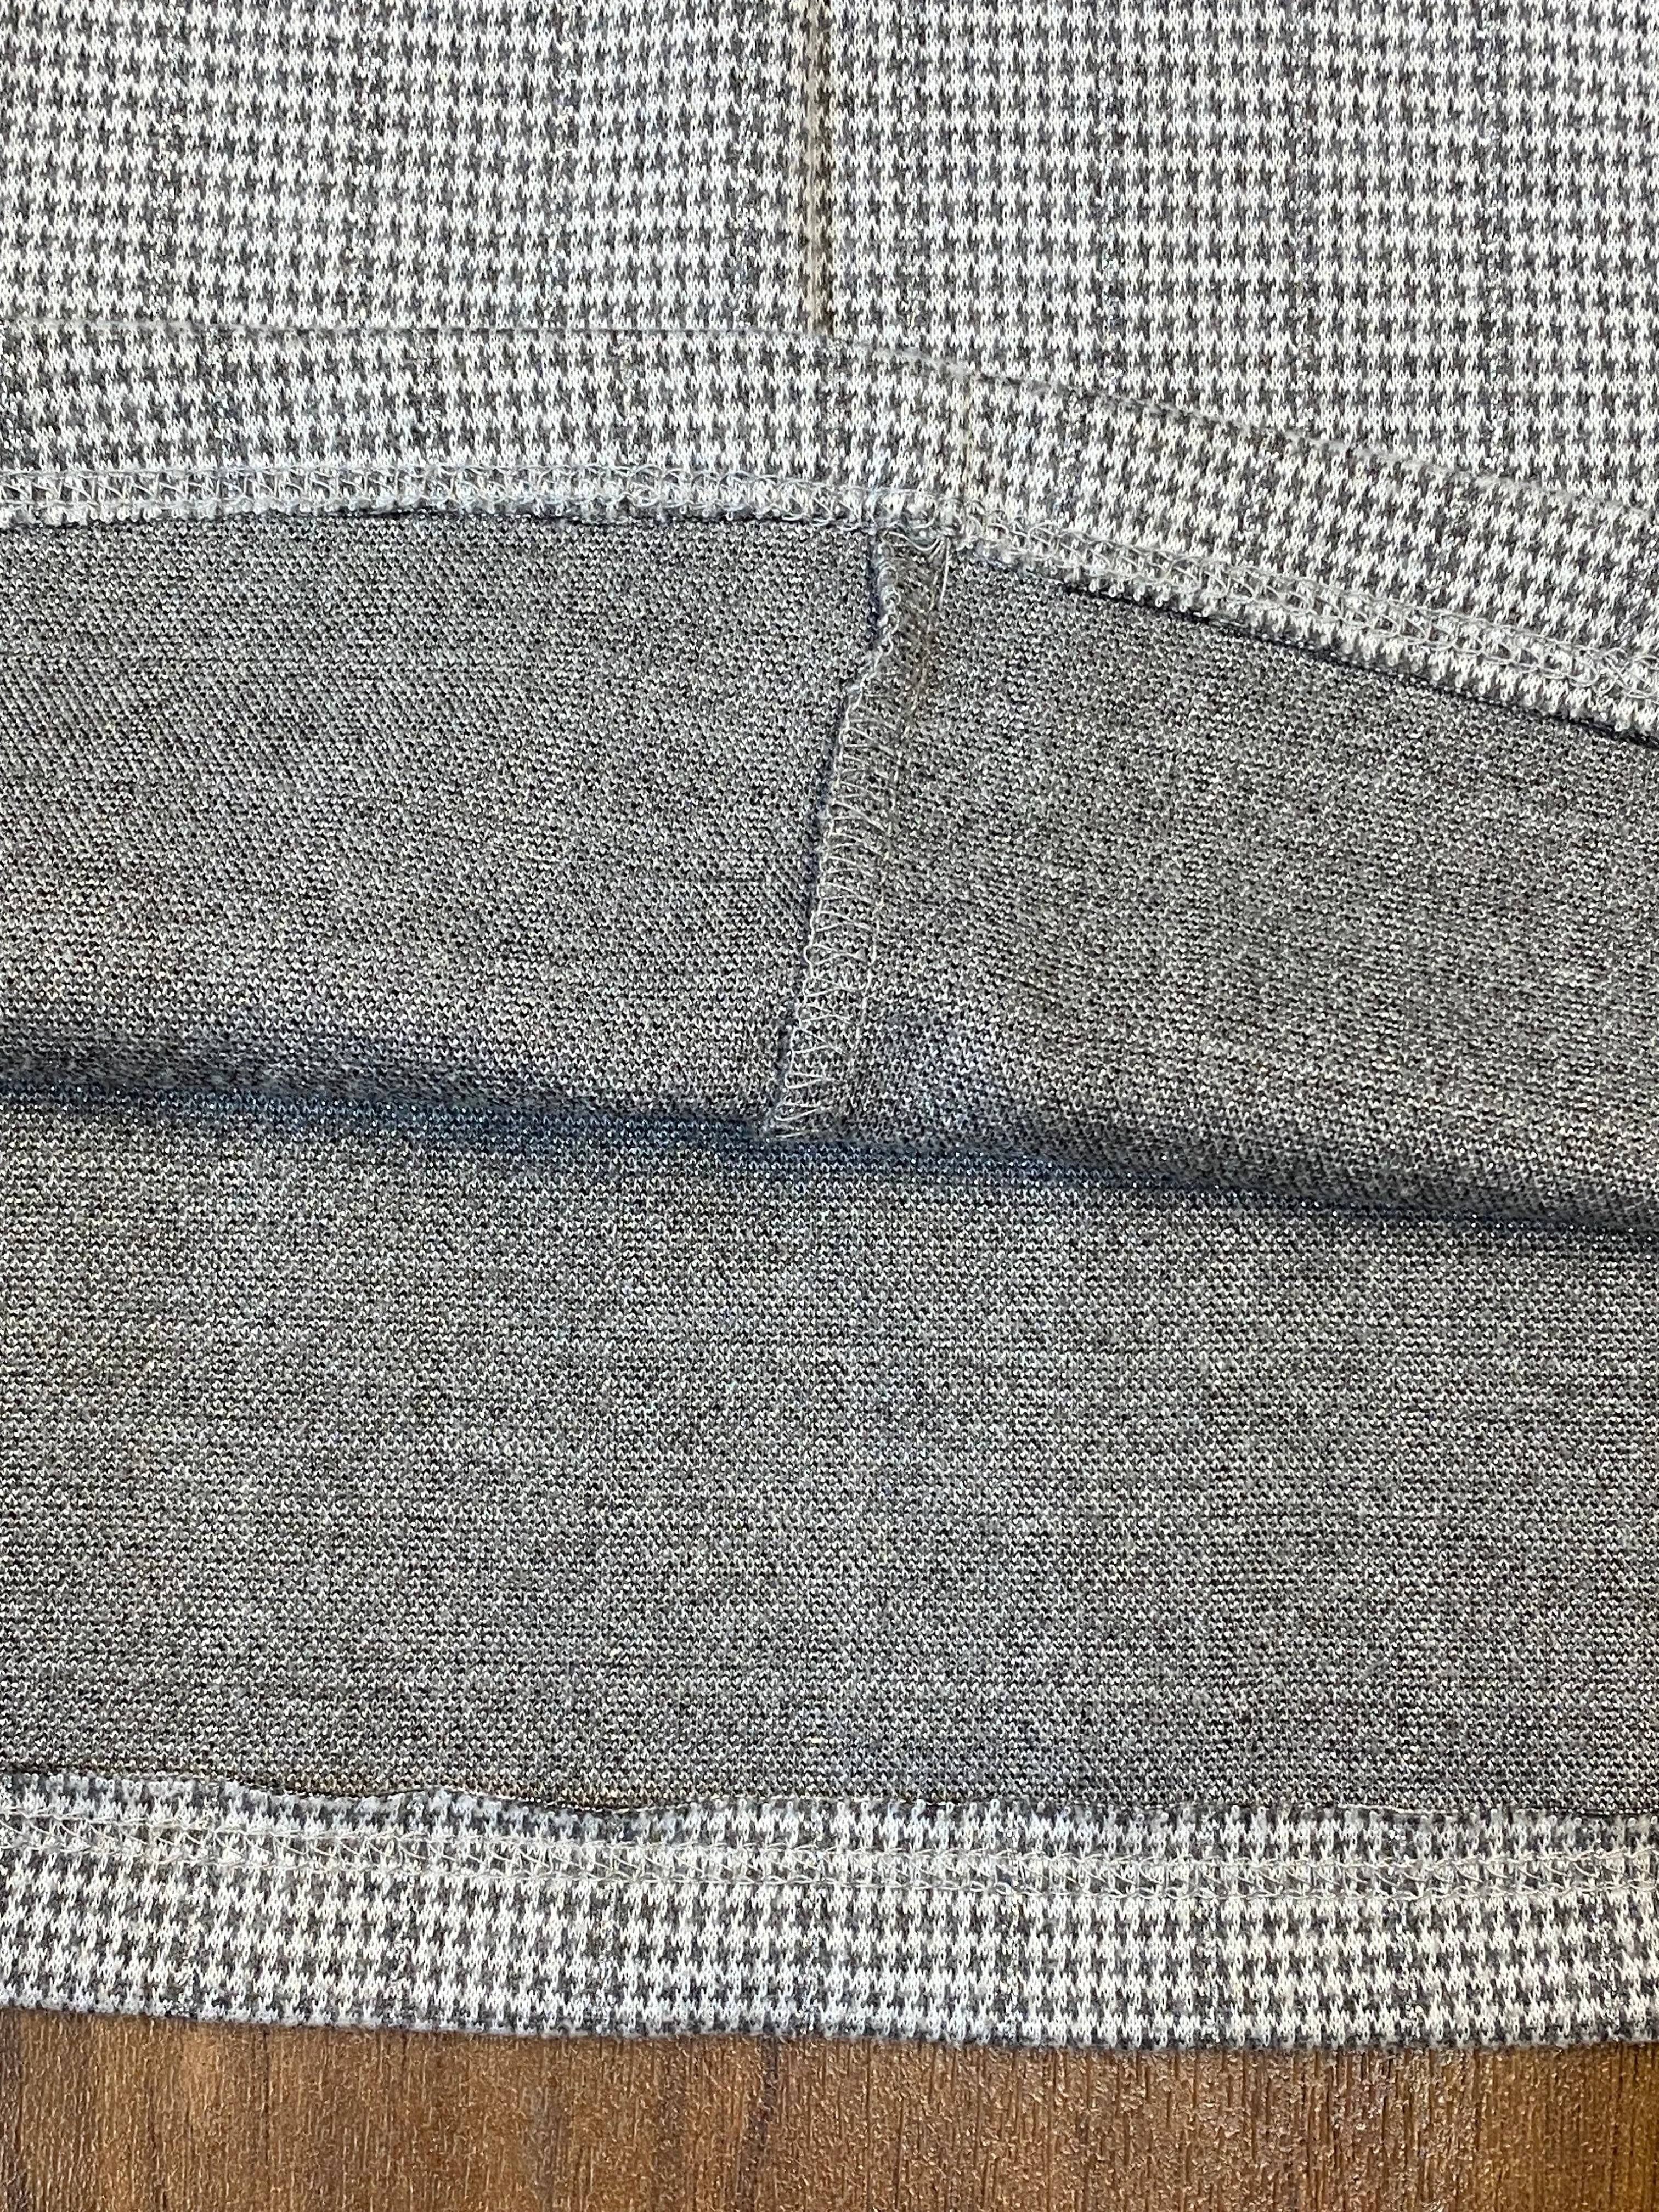 Swingkleid 60er Jahre Stil grau weiß Gr.44, Vintage